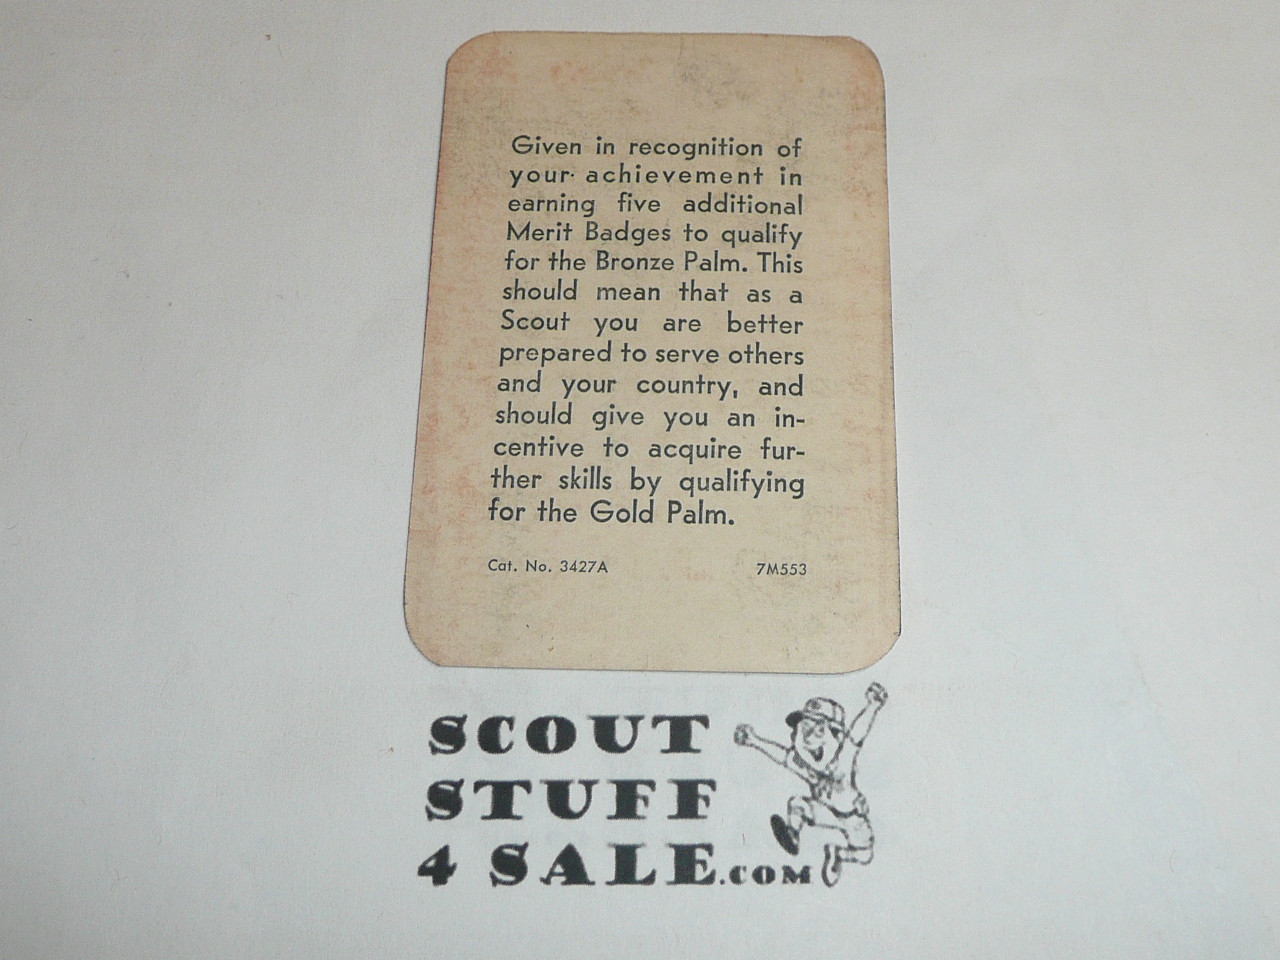 1956 Eagle Scout with Bronze Palm Rank Achievement Card, Boy Scout